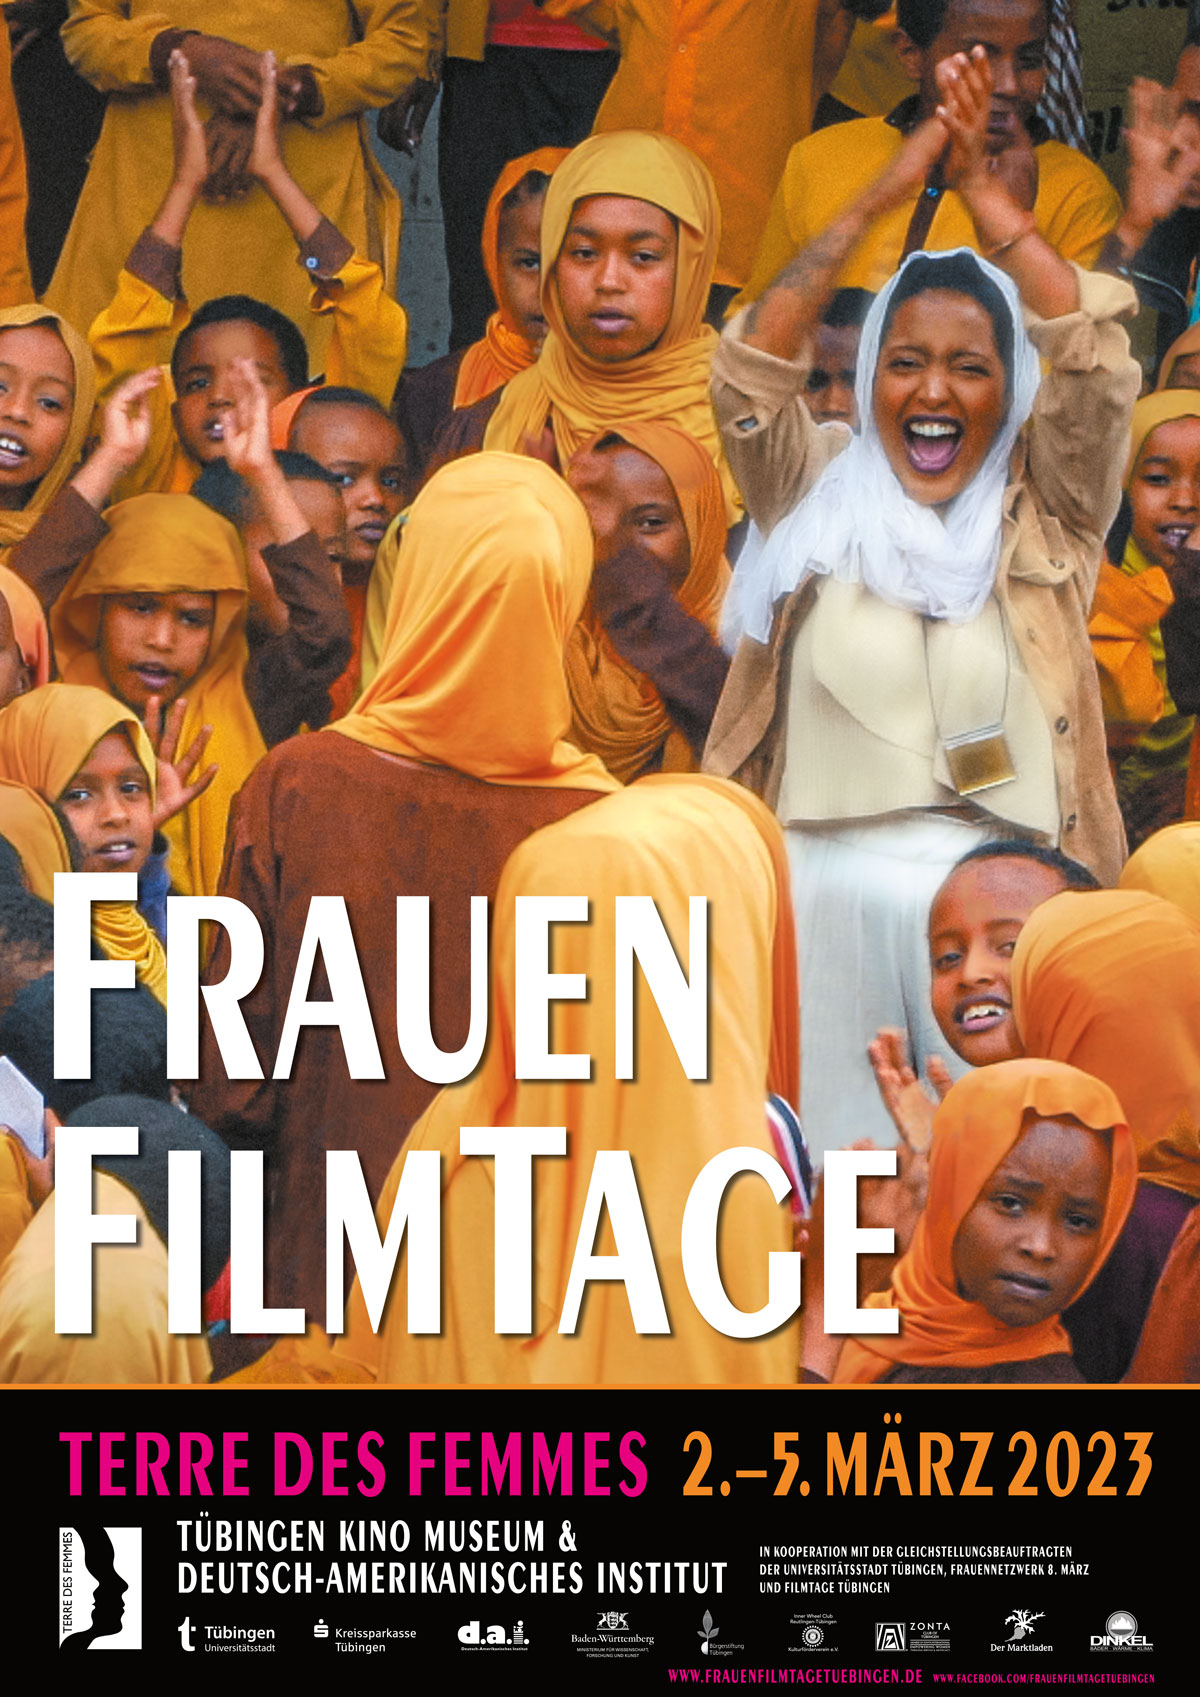 FrauenFilmTage 2023 in Tübingen